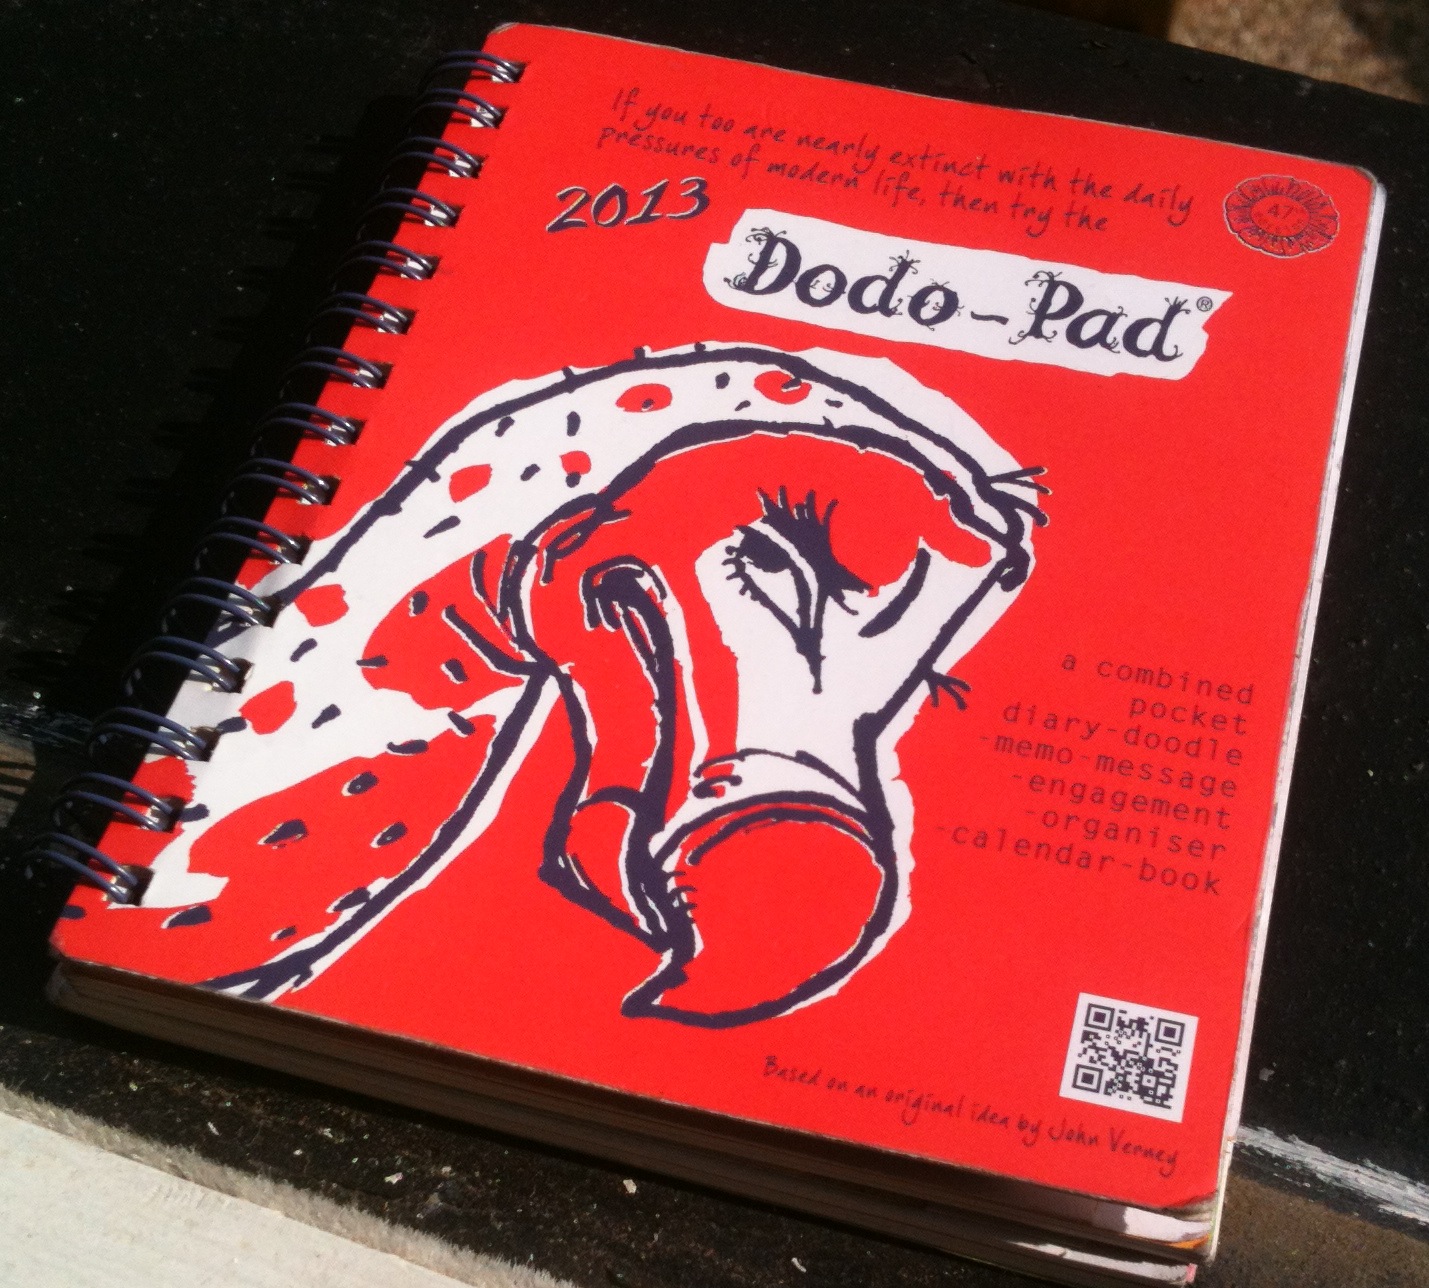 I’m a convert: Dodo-pad love